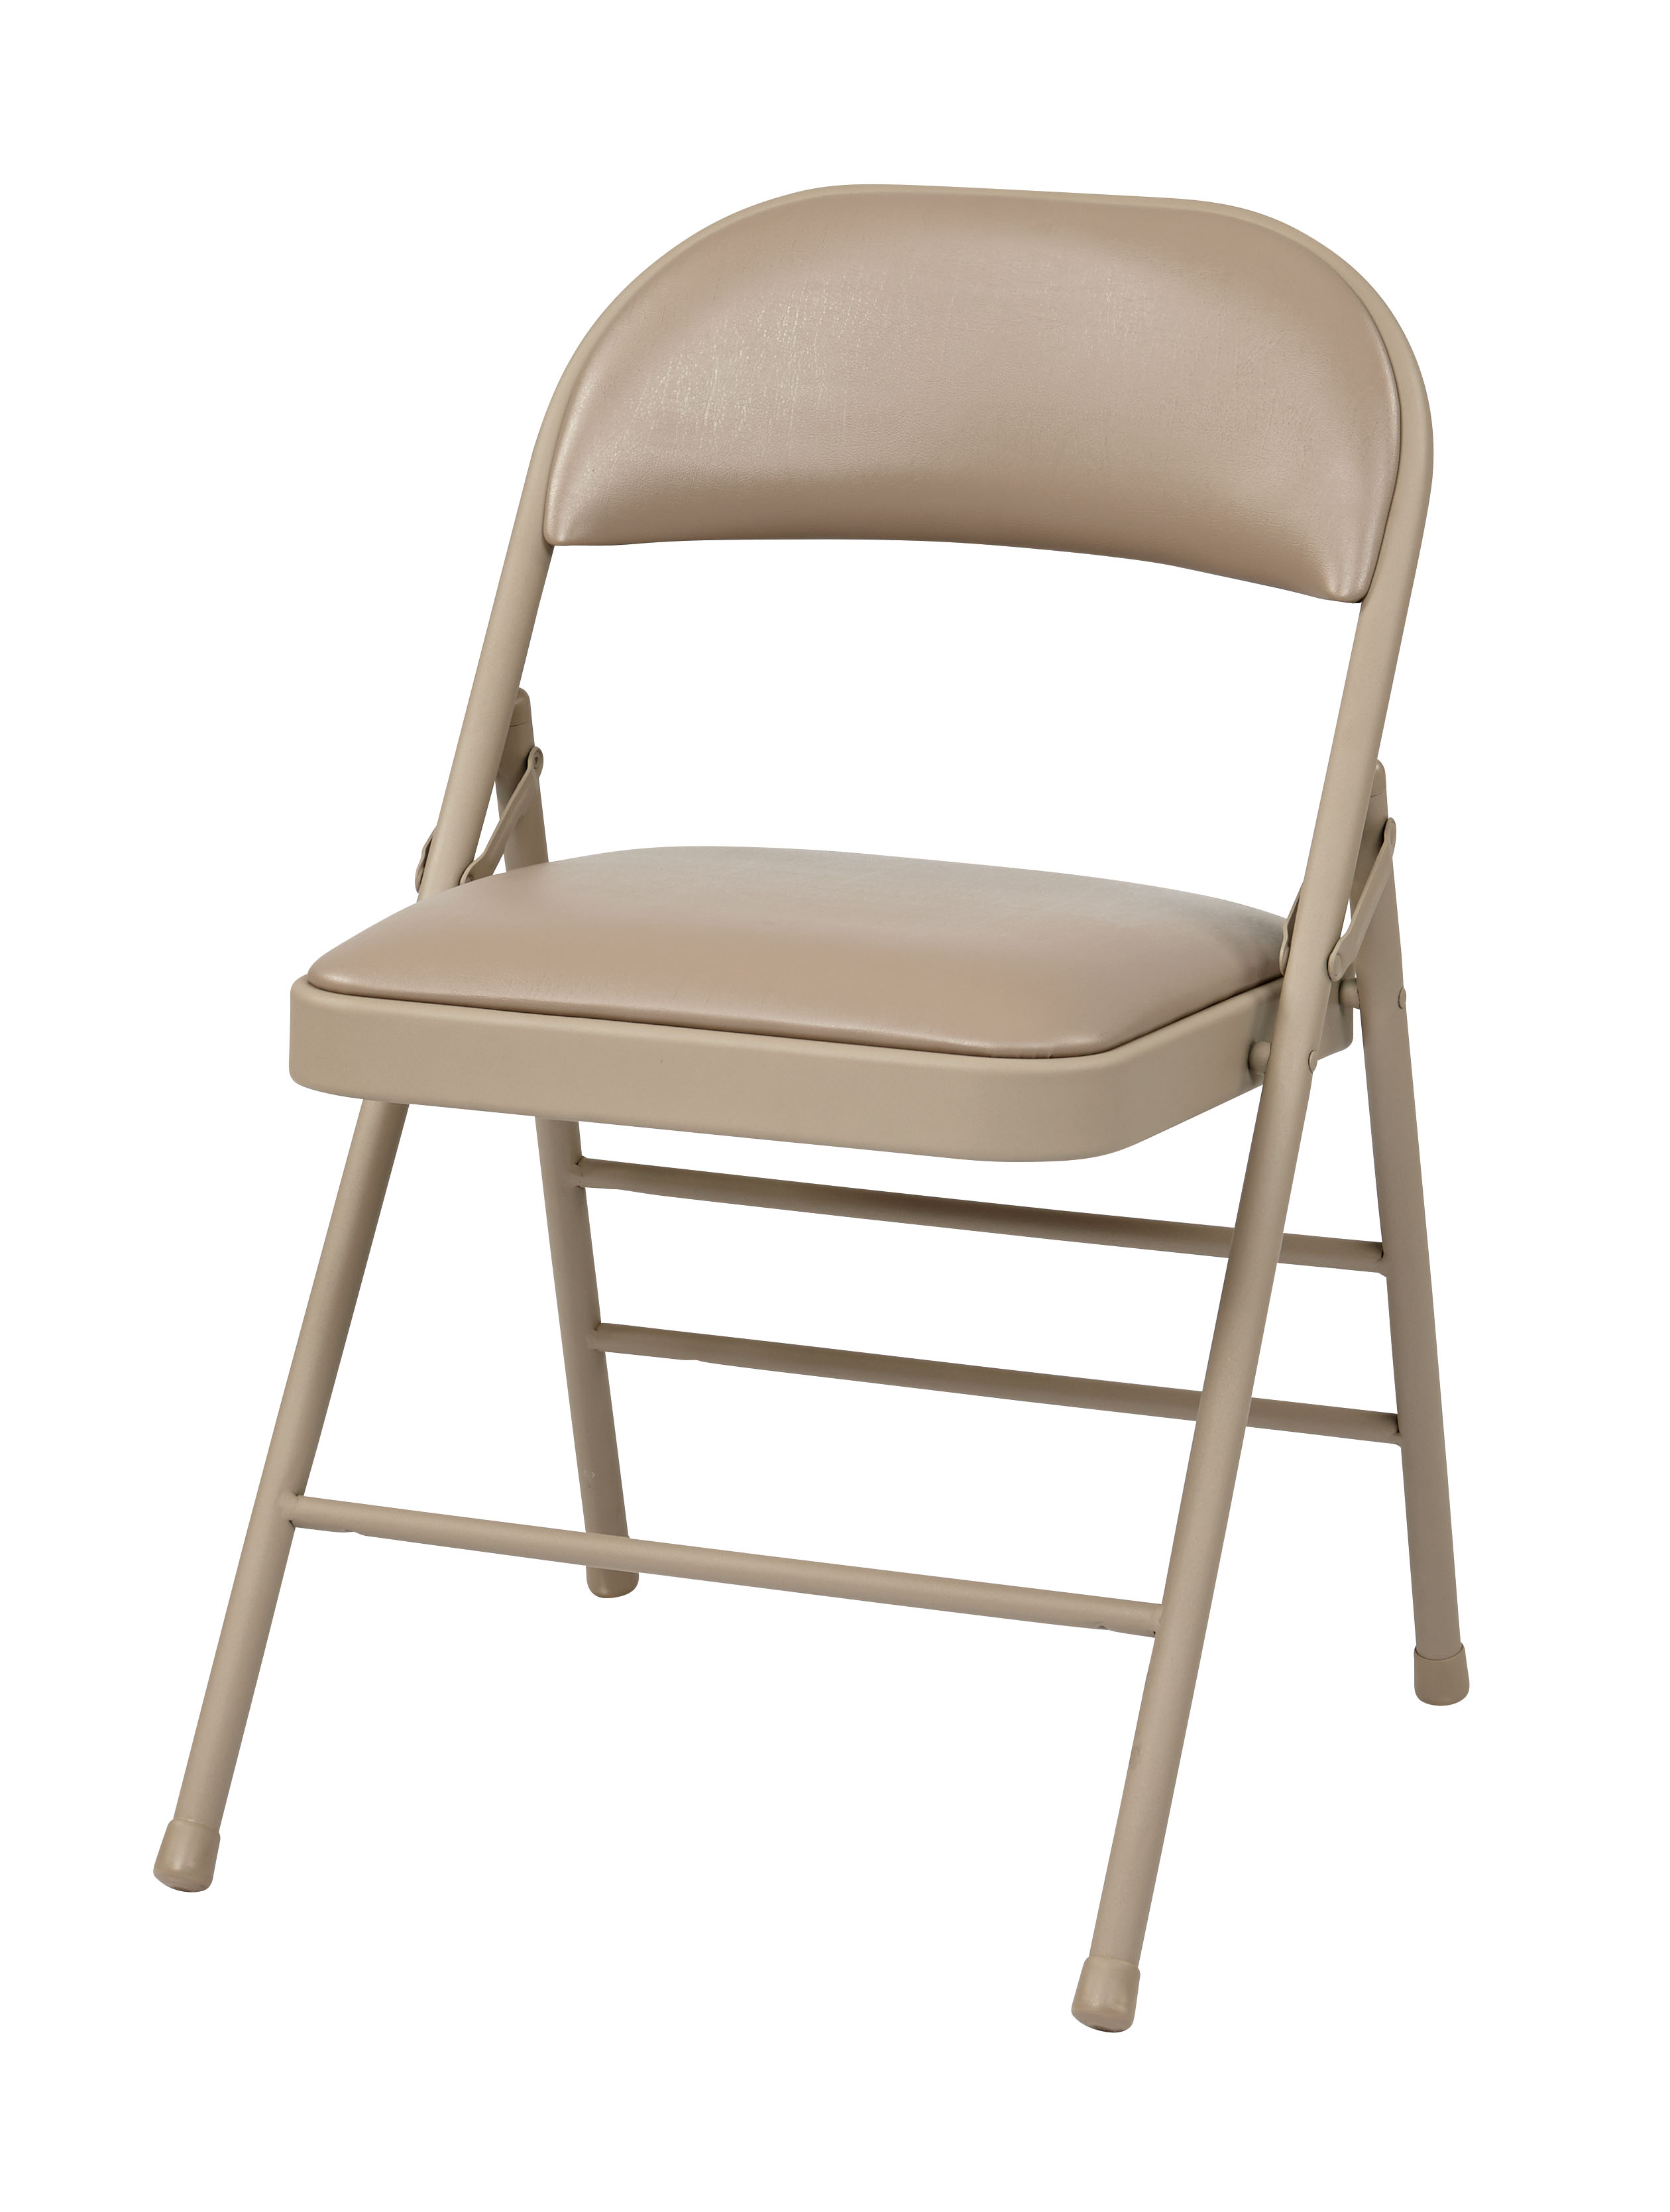 #FF23124V Office Star Worksmart folding chair